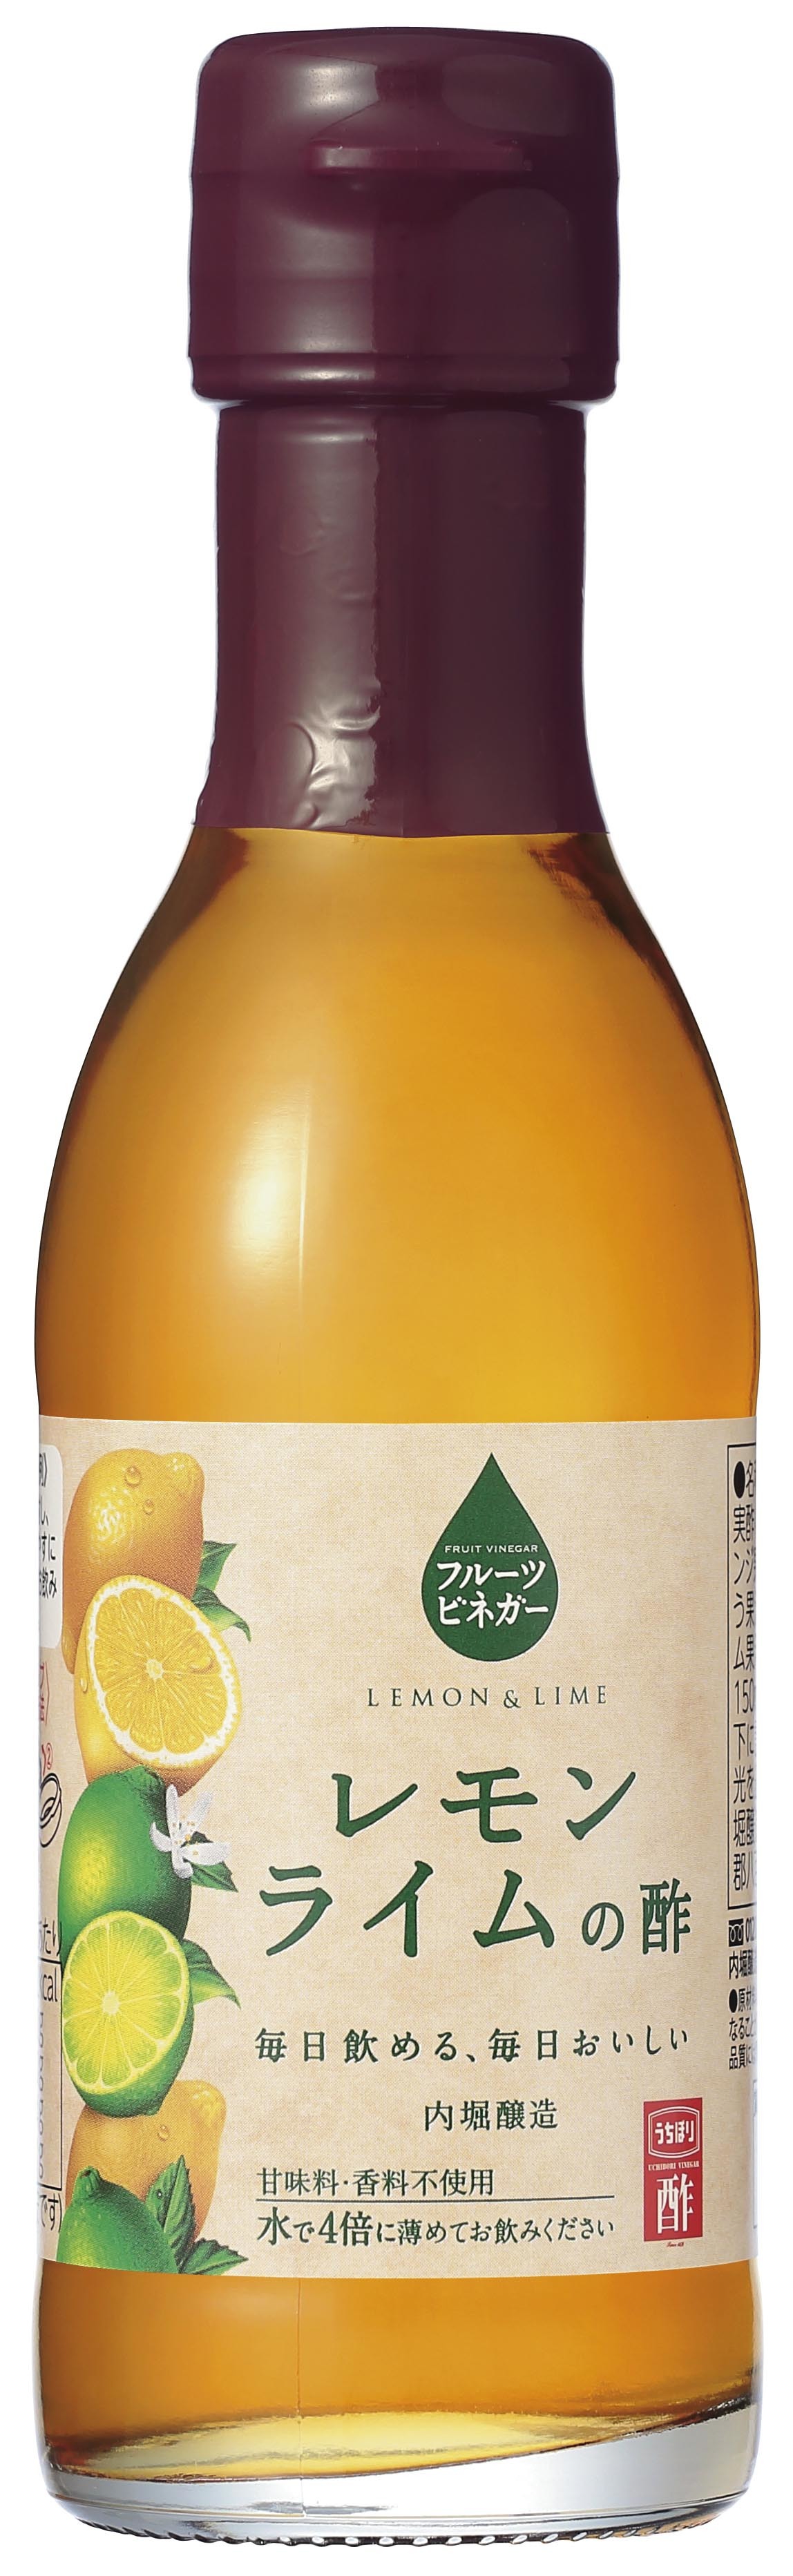 77%OFF!】 内堀醸造 フルーツビネガー レモンライムの酢 360ml × 3本 terahaku.jp